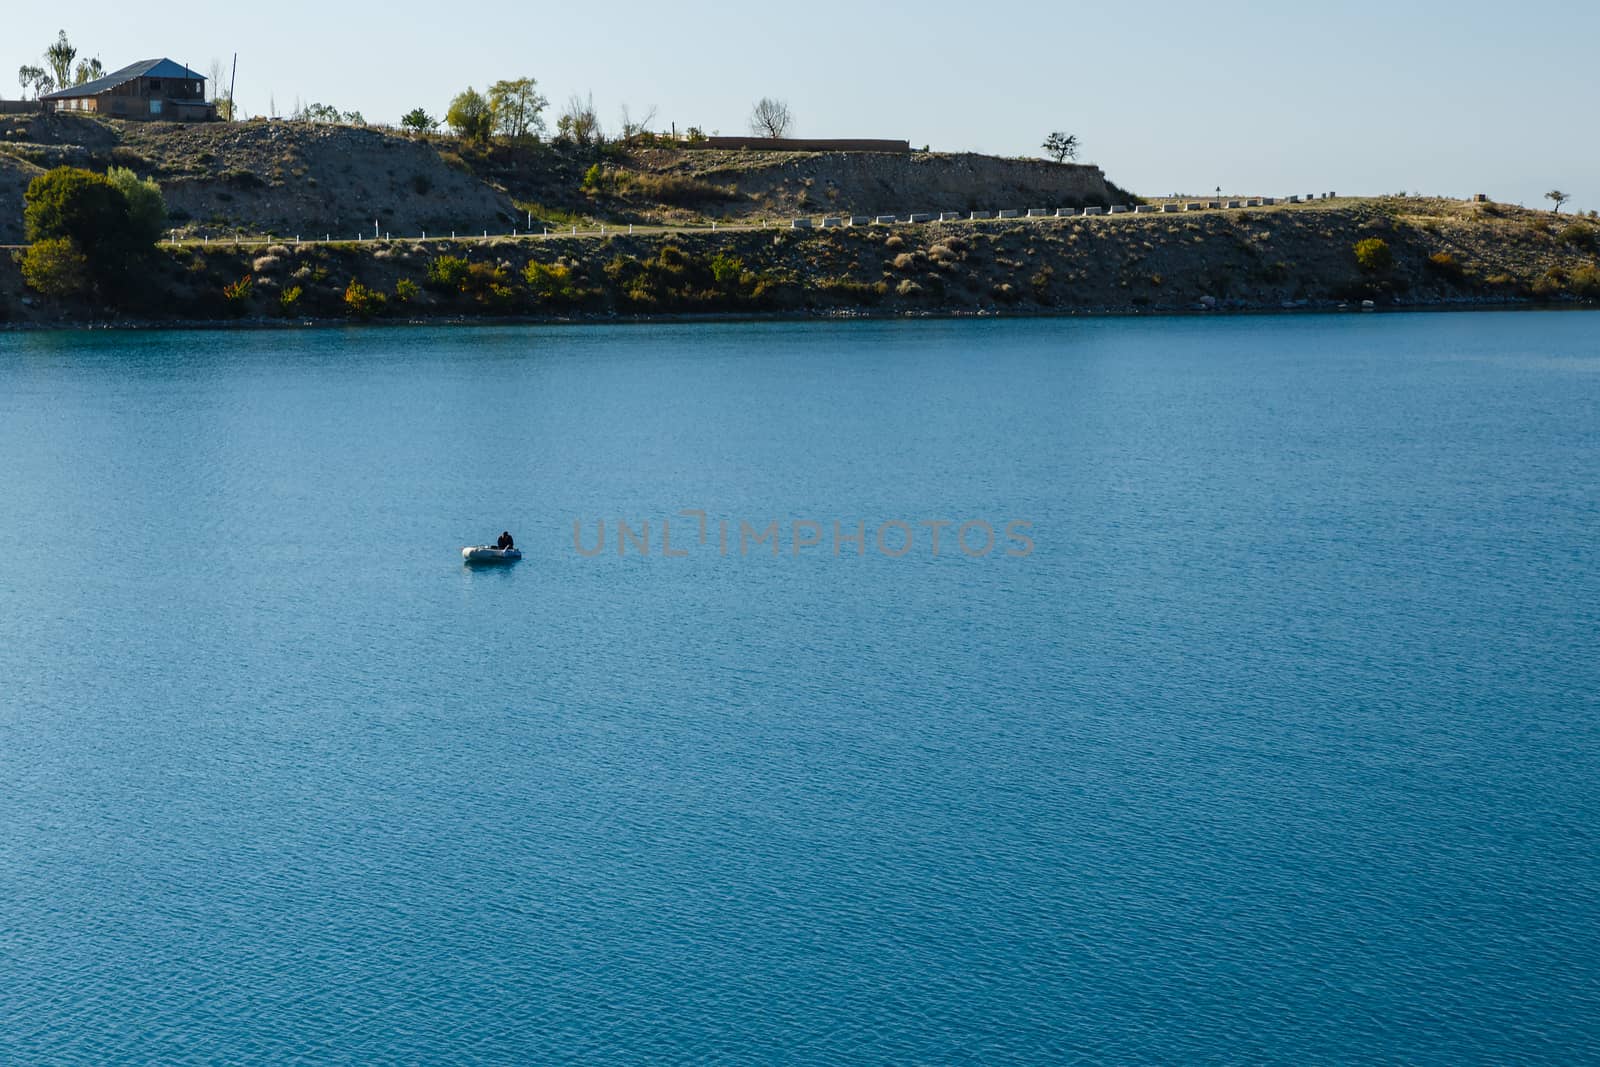 South shore of Issyk-kul lake in Kyrgyzstan, lonely fisherman on a boat on Issyk-Kul Lake